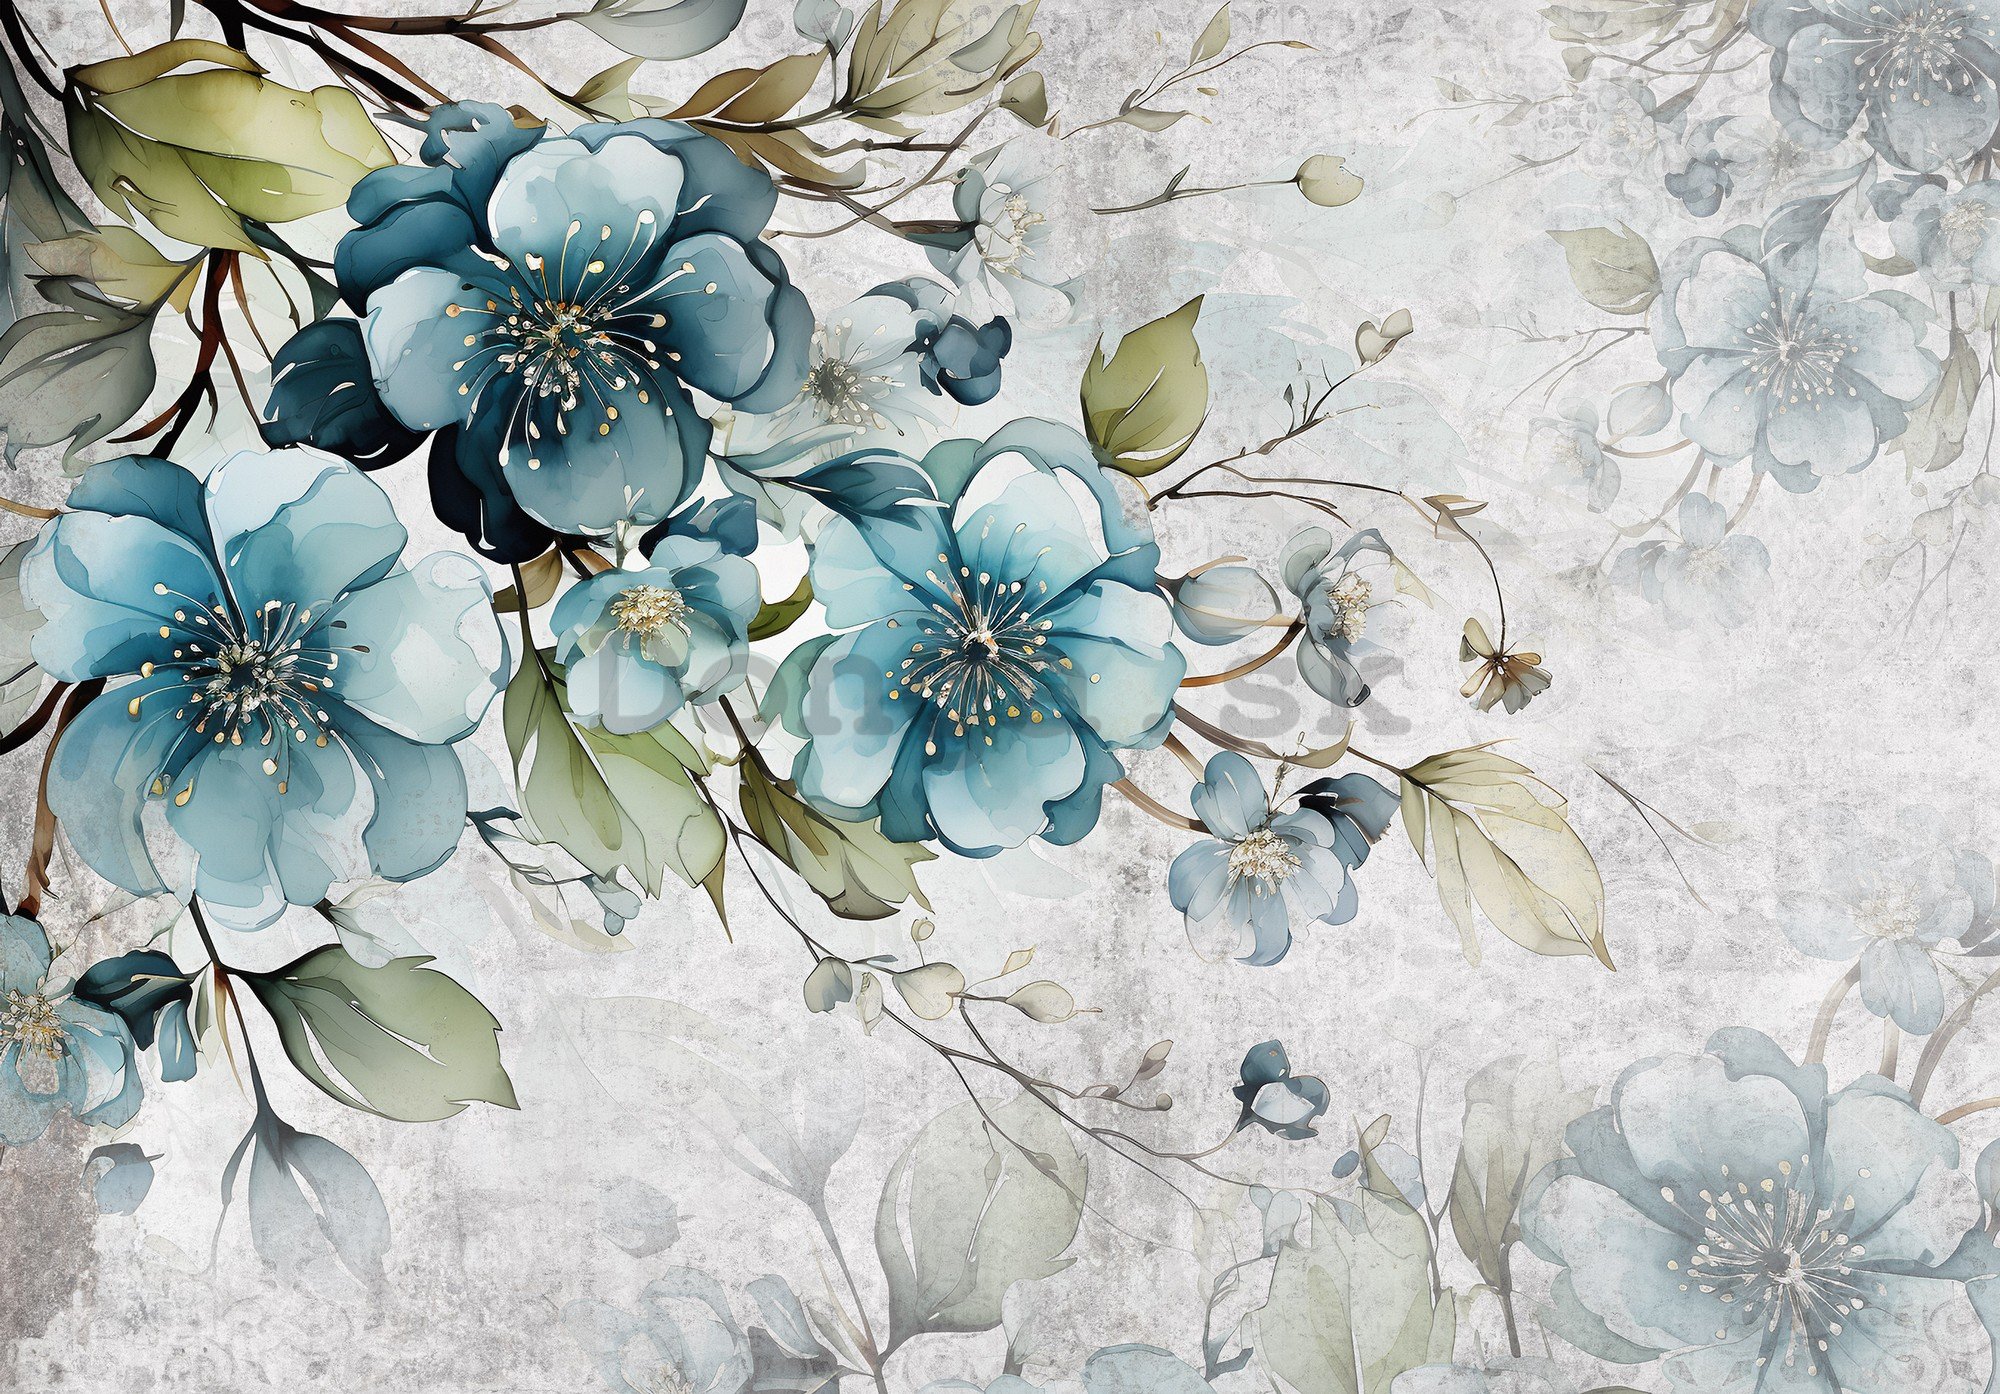 Fototapety vliesové: Turquoise Flowers - 254x184 cm